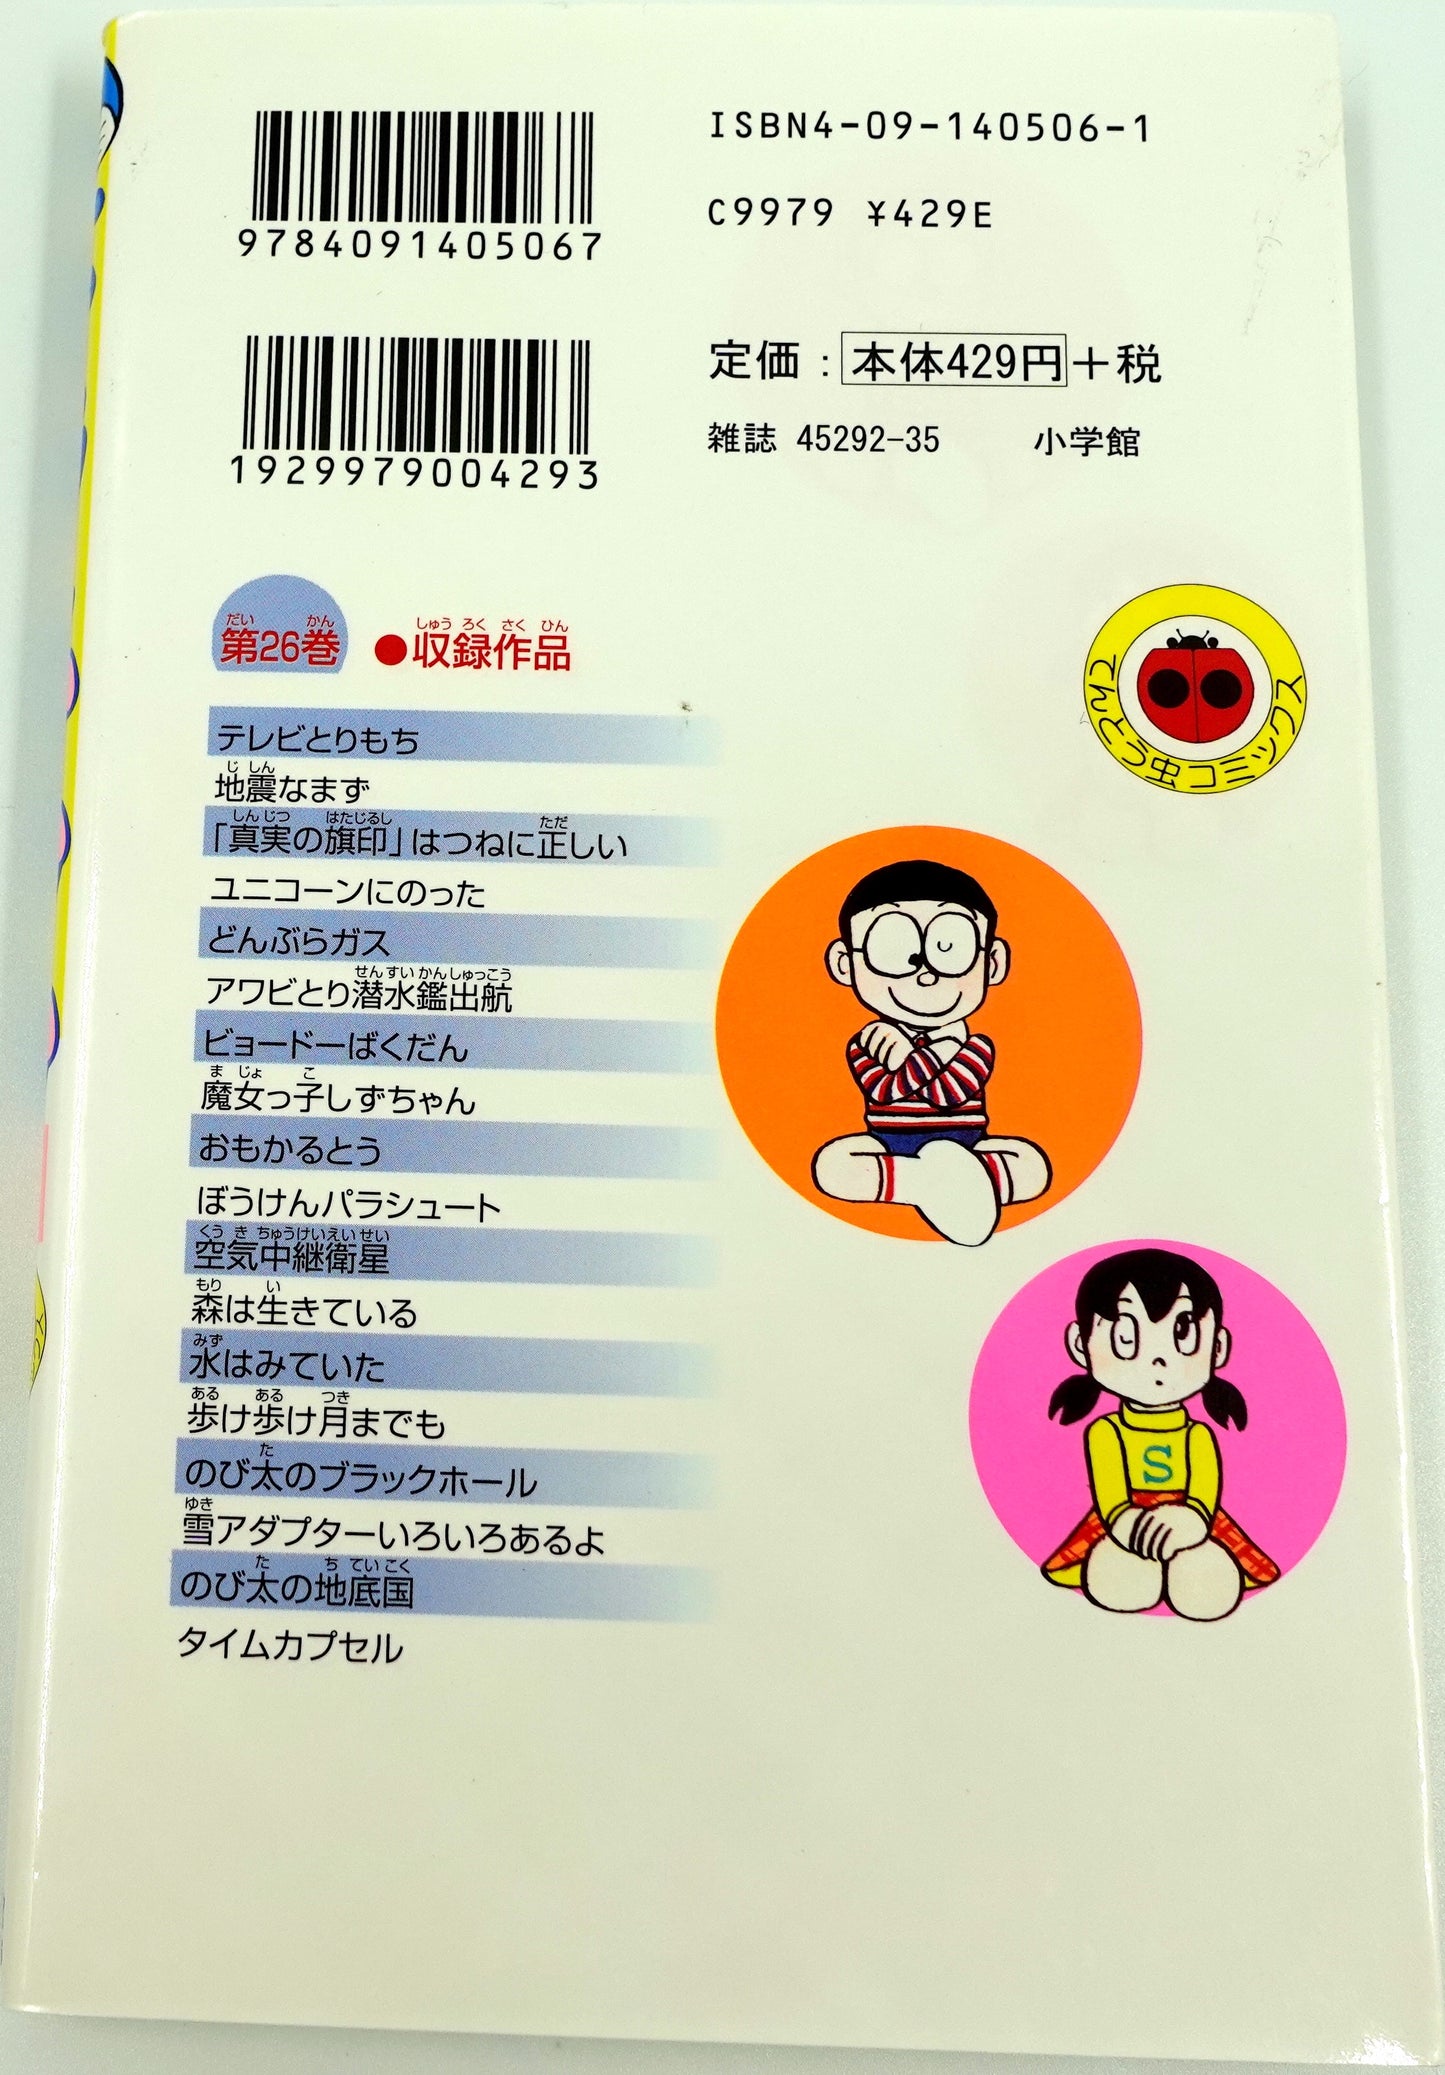 Doraemon Vol.26- Official Japanese Edition